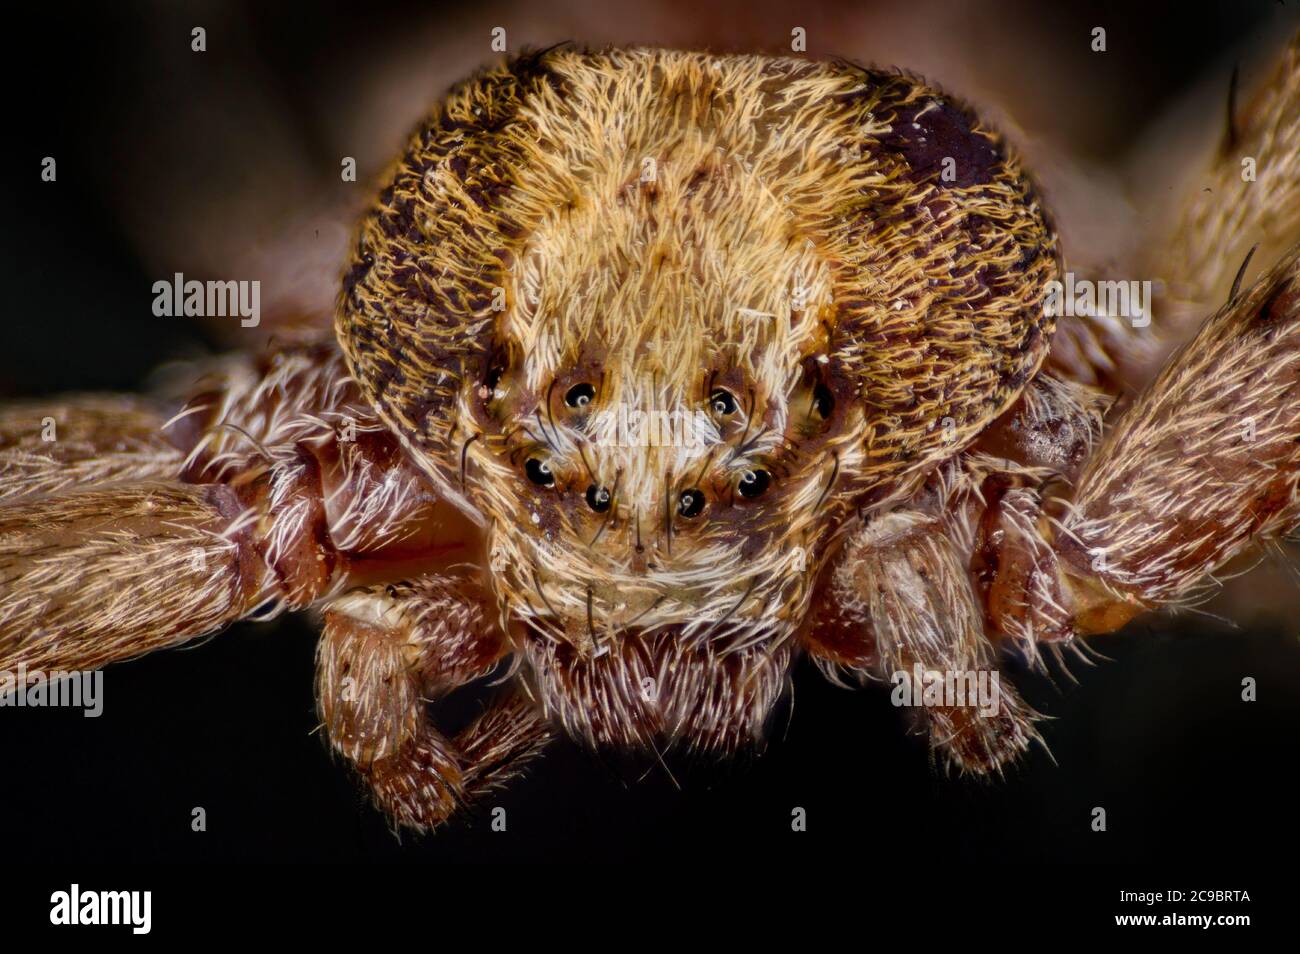 Running spider, Philodromus caureolus, female. UK, detail portrait showing eyes, palps Stock Photo